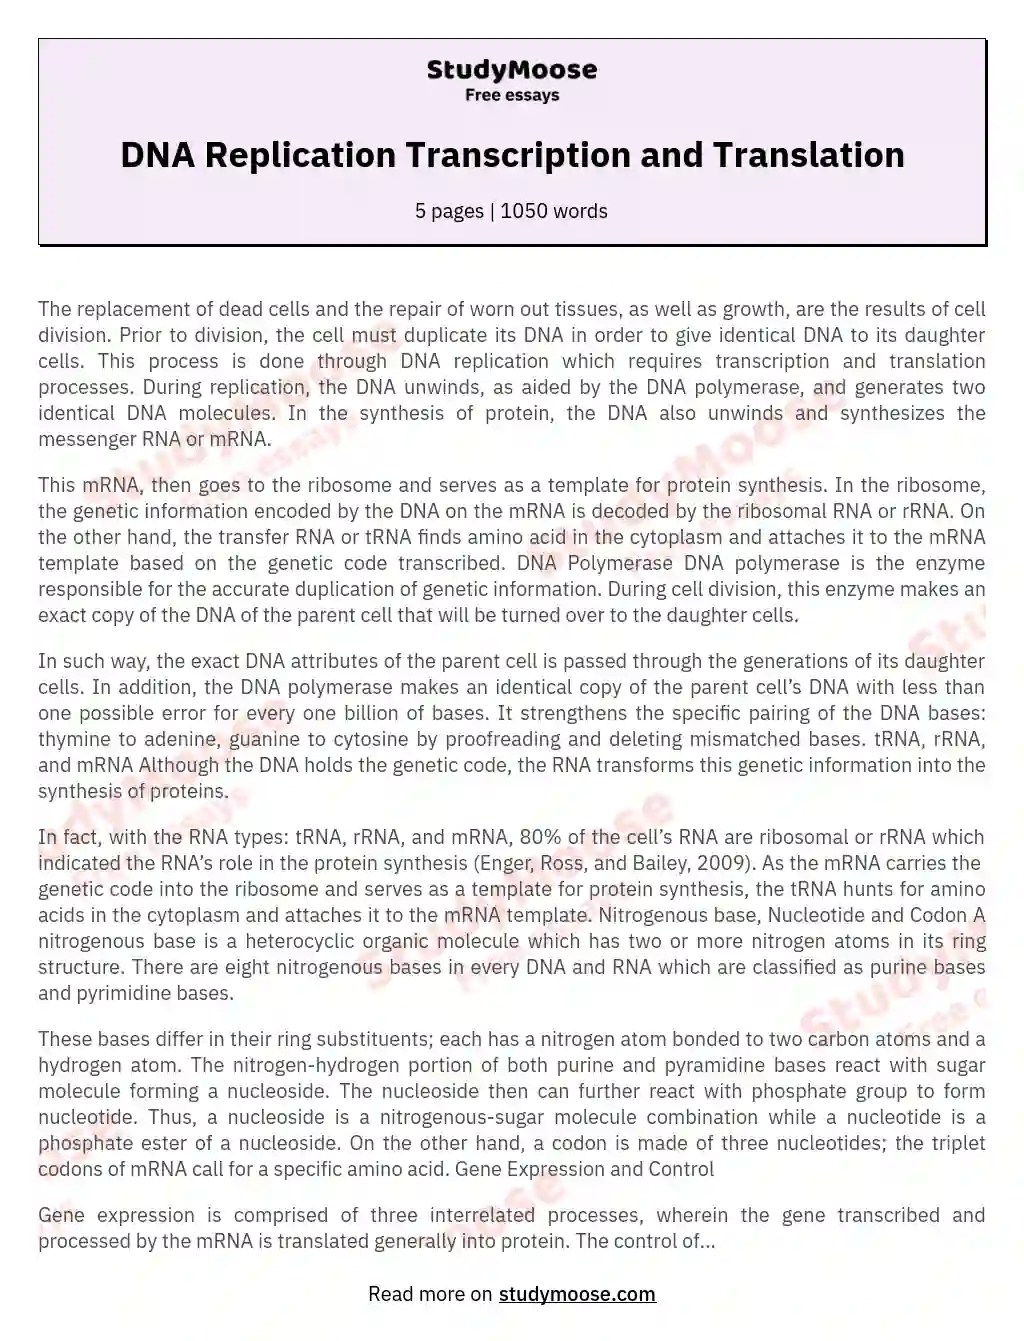 DNA Replication Transcription and Translation essay